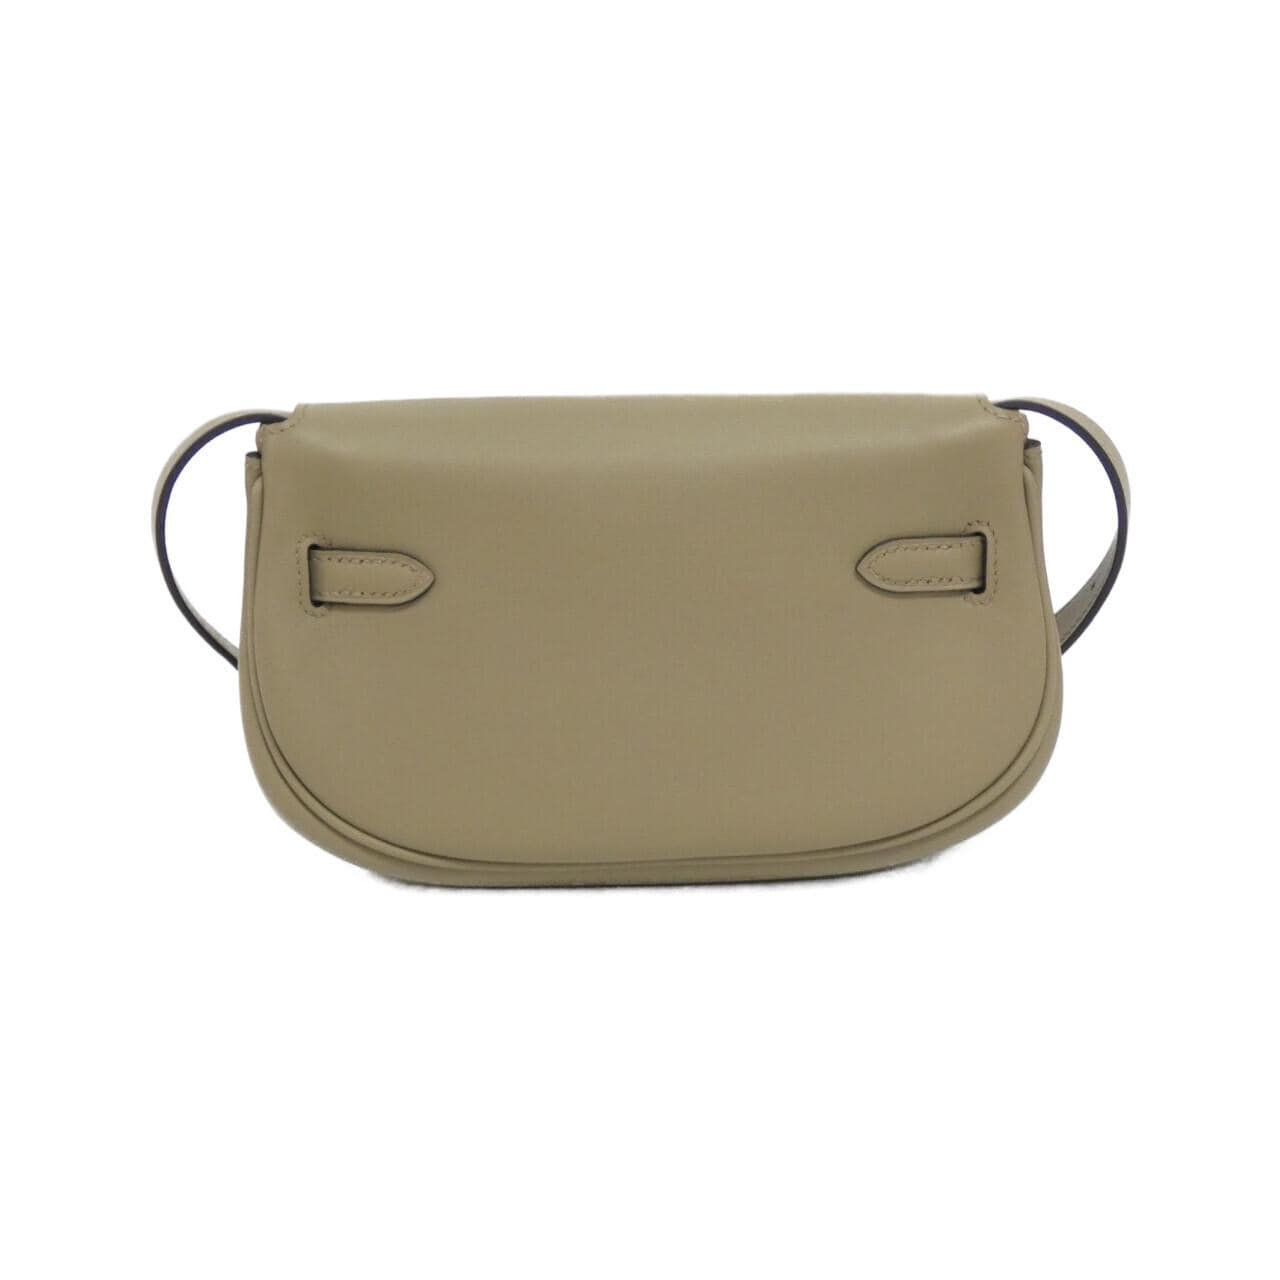 [Unused items] HERMES KELLY MOVE 084552CC shoulder bag